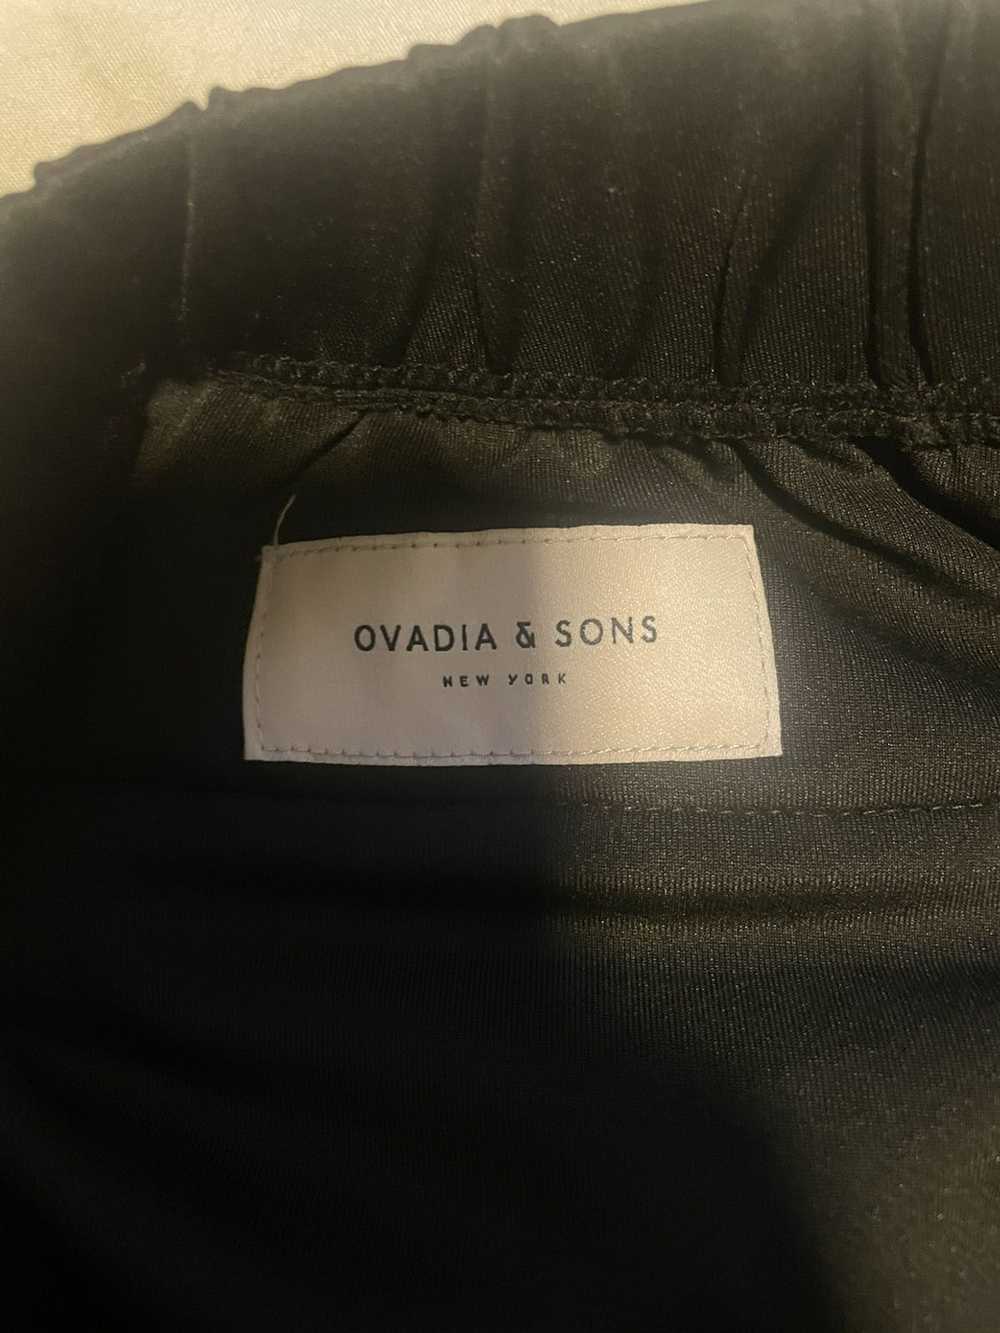 Ovadia & Sons Ovadia & Sons - image 5